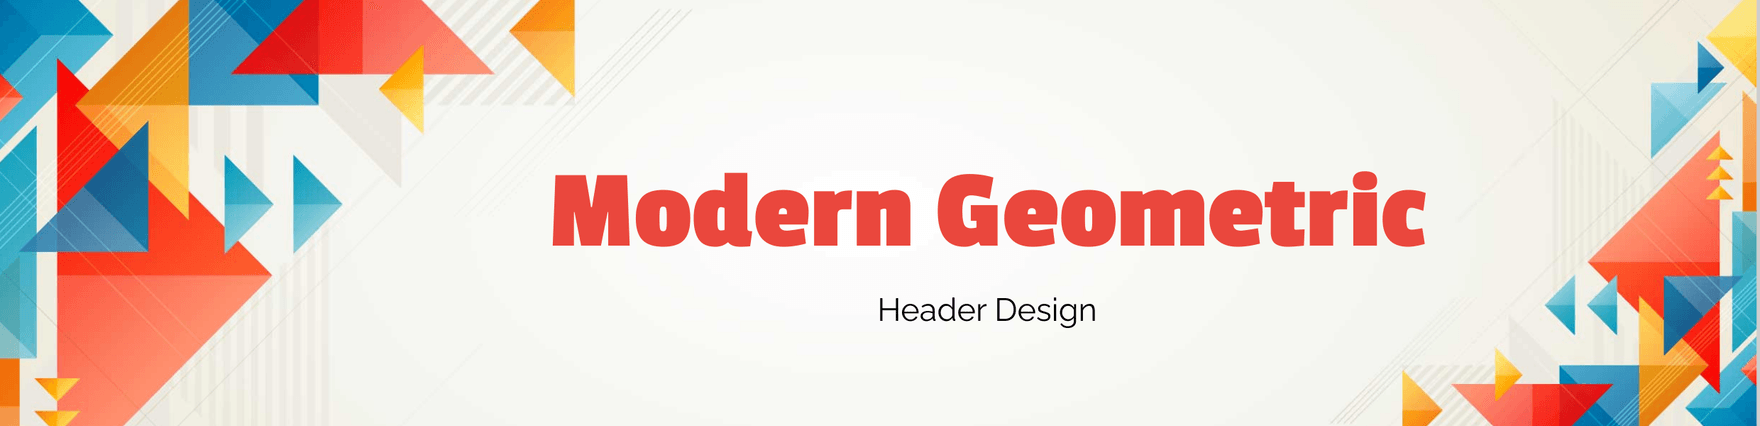 Modern Geometric Header Design